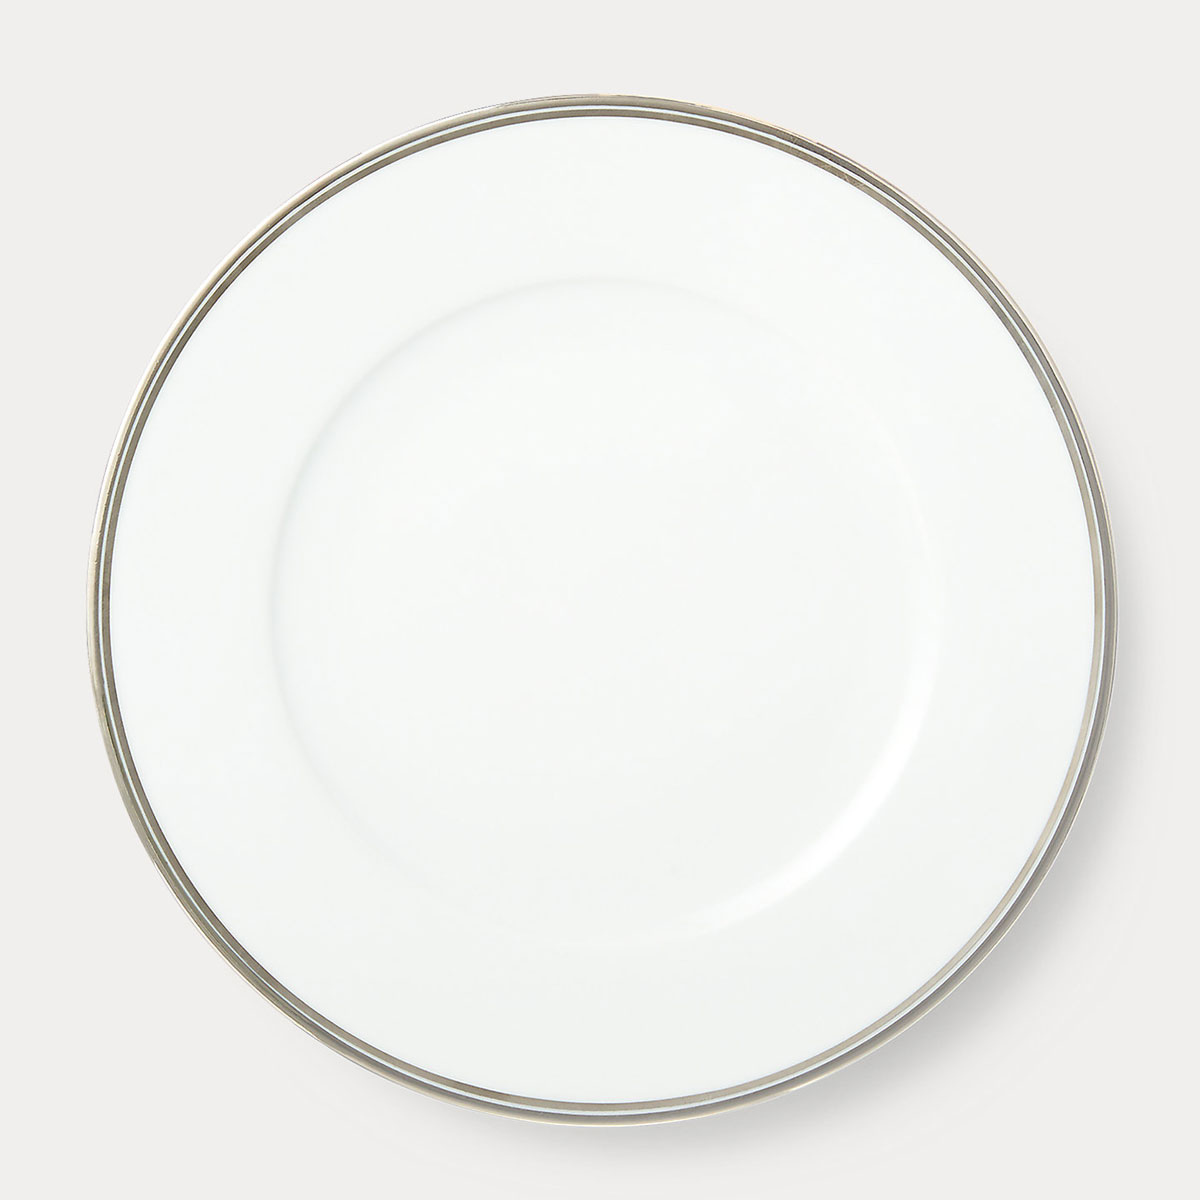 Ralph Lauren Wilshire Dinner Plate, Silver And White